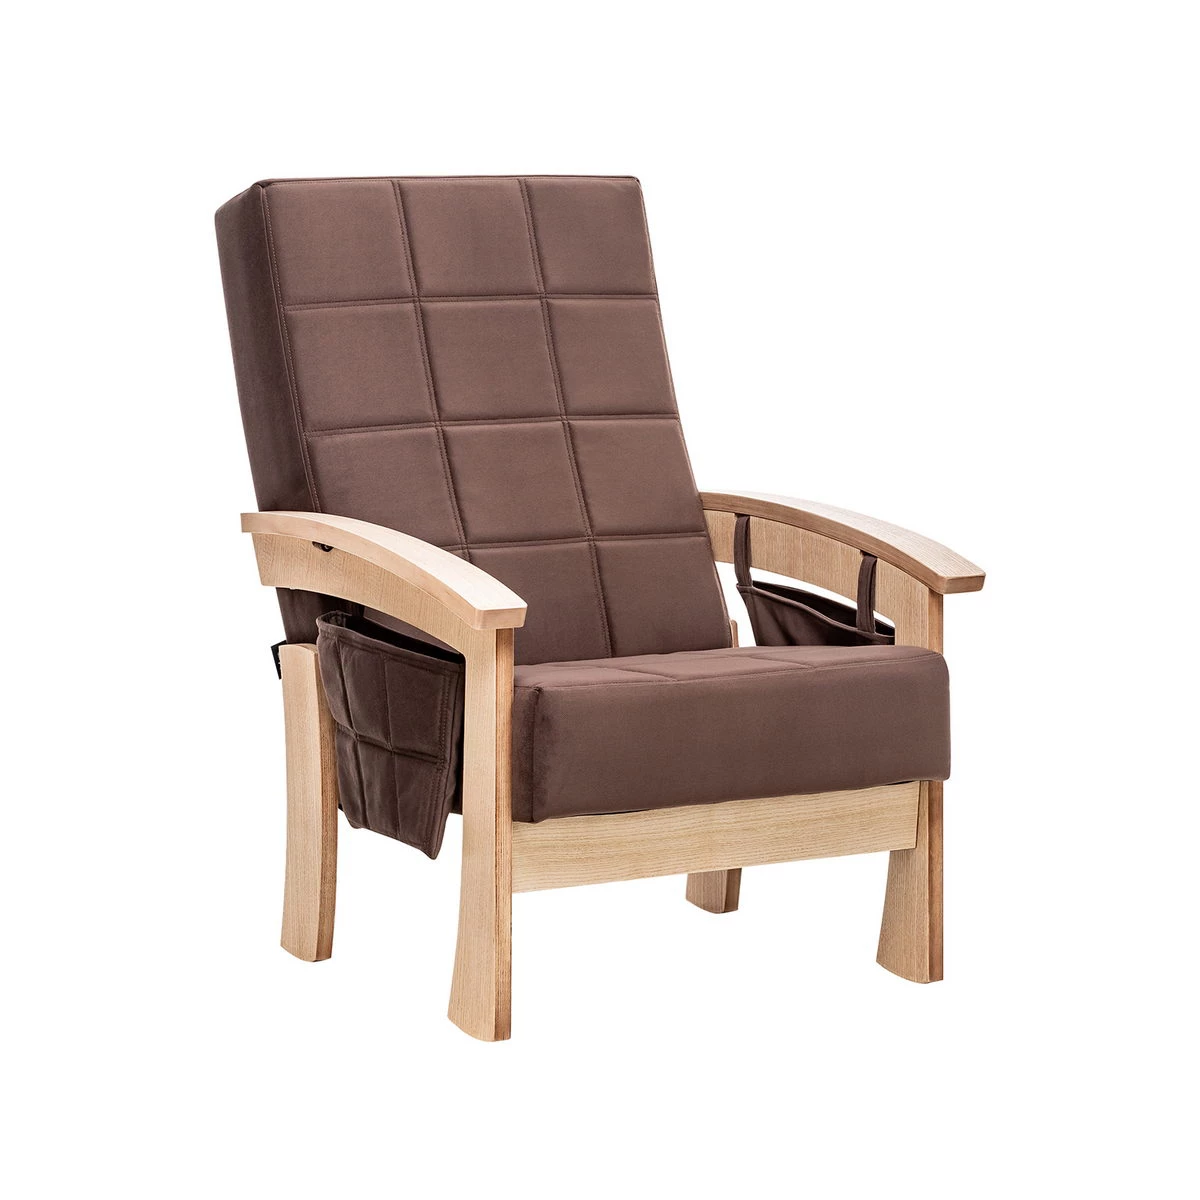 Кресло для отдыха Нордик (Импэкс). Цвет каркаса: Дуб шпон; Цвет обивки: Maxx 235